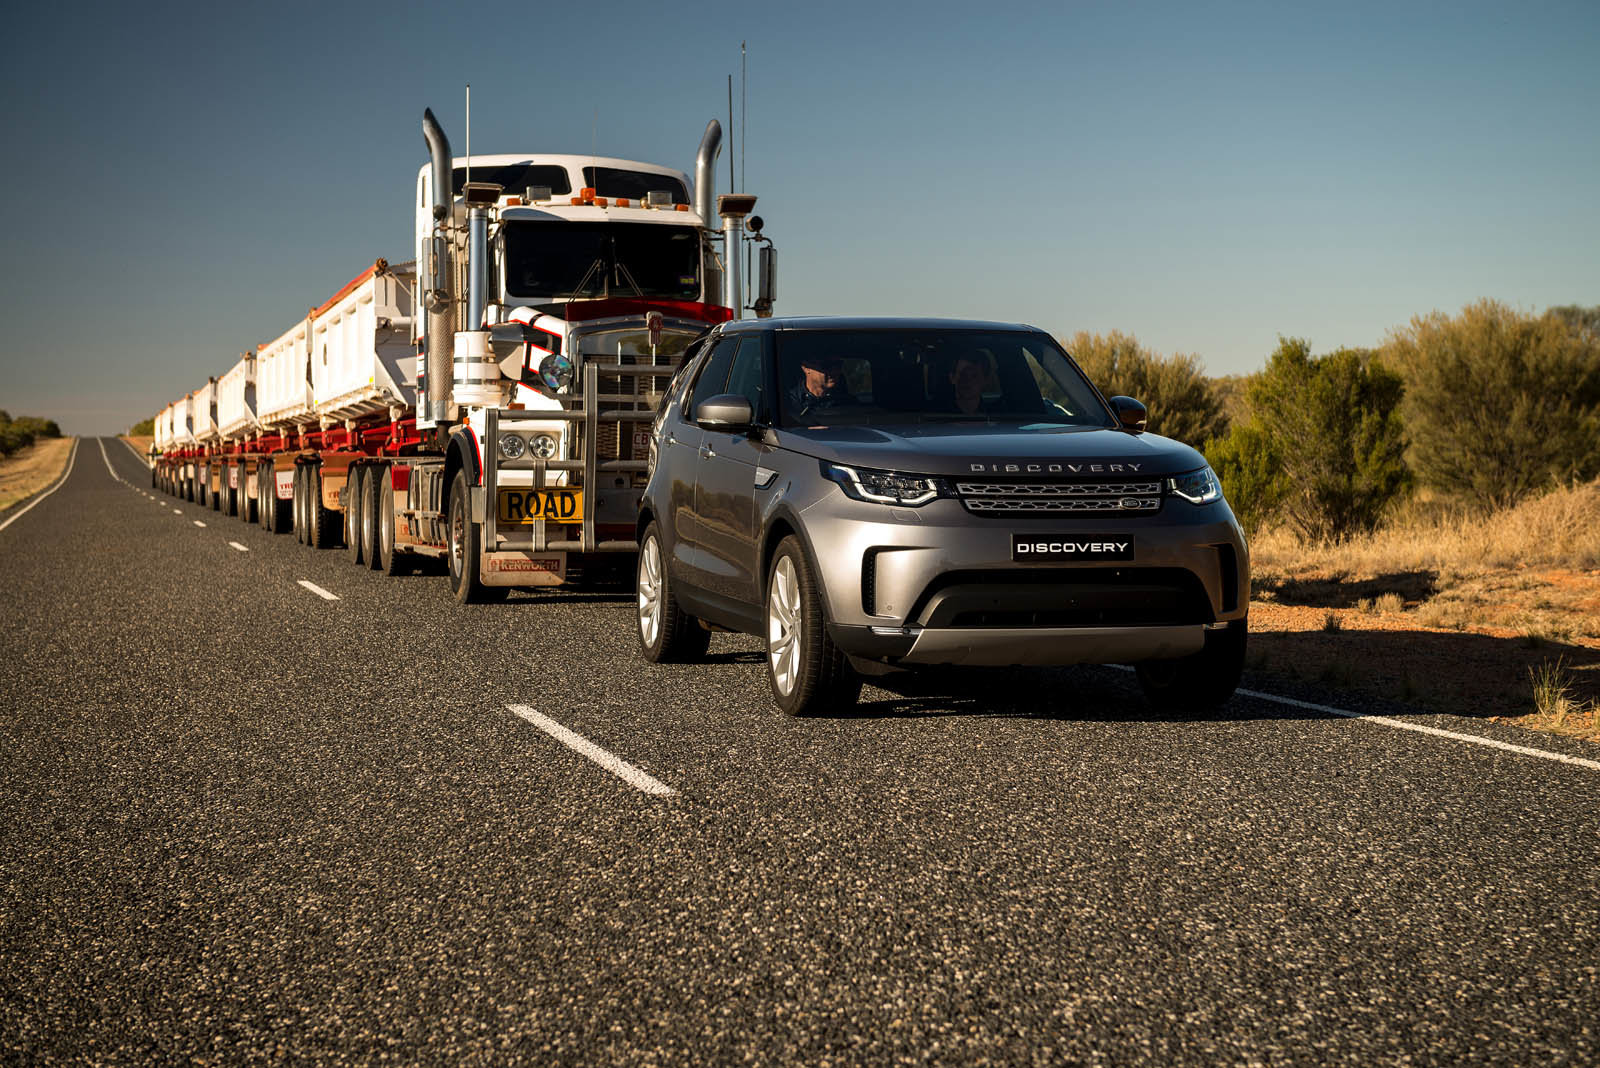 Land Rover Discovery se bez problémů popral i se 110 tunovým nákladem